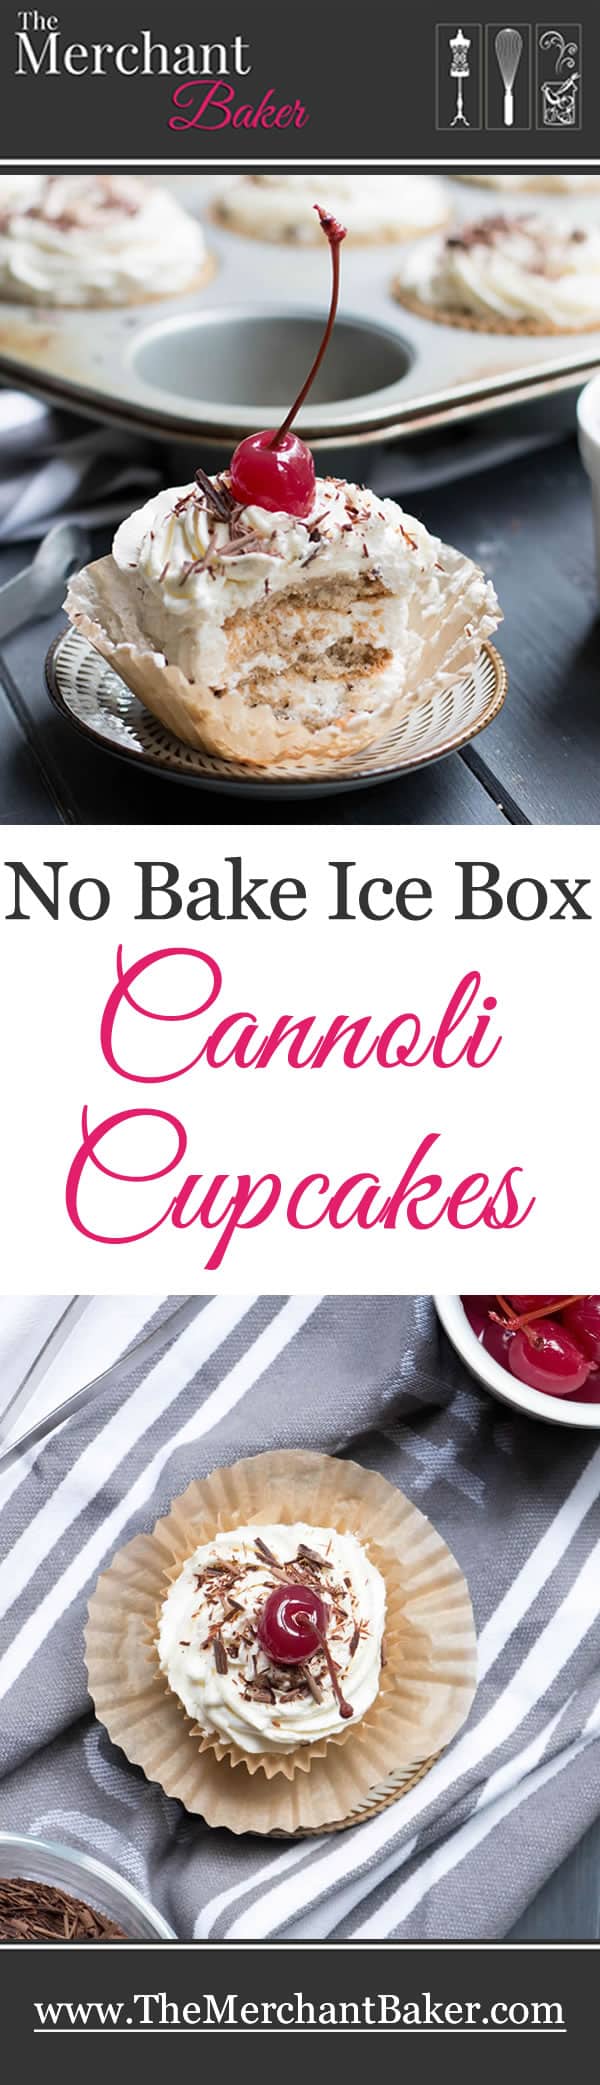 No Bake Ice Box Cannoli Cupcakes